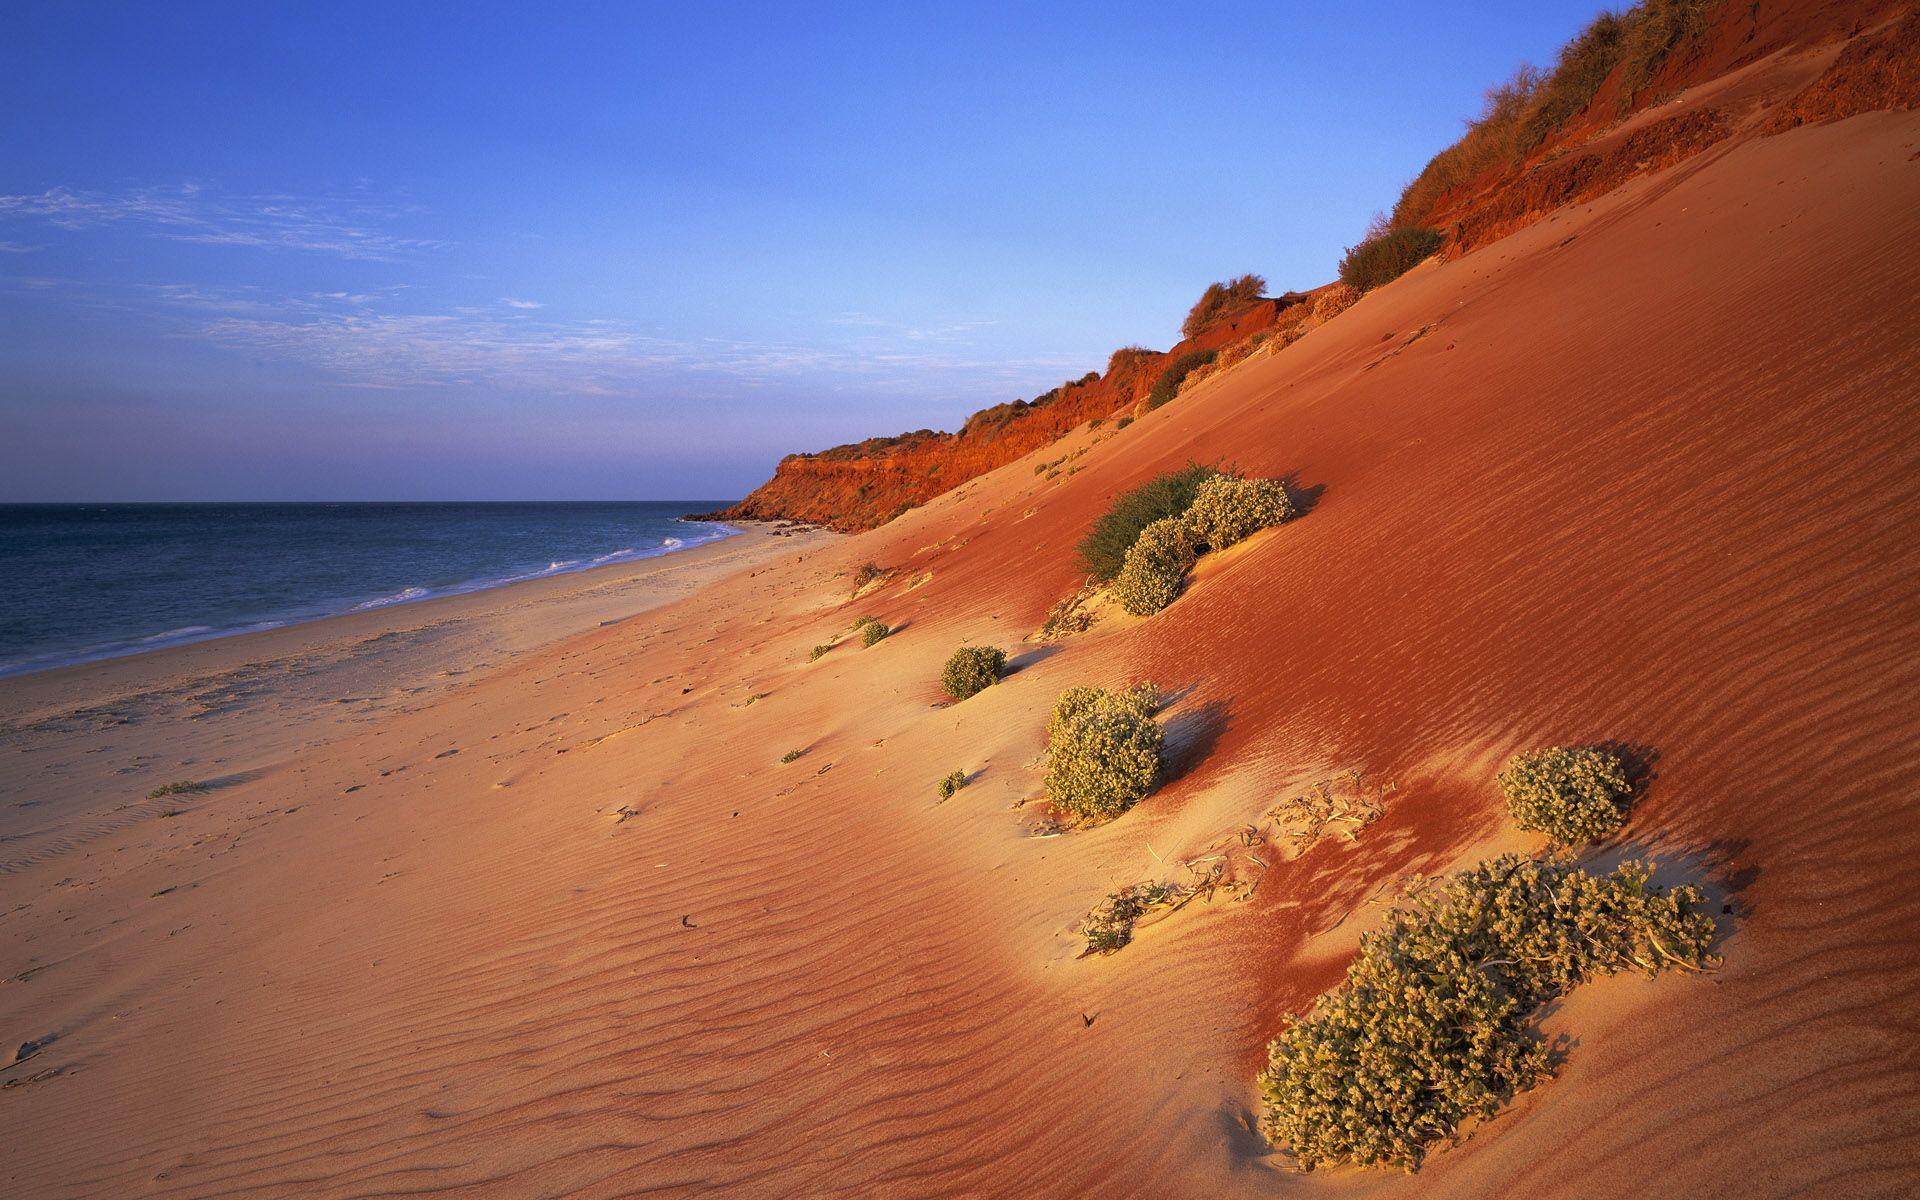 The sandy coast of Australia wallpaper and image